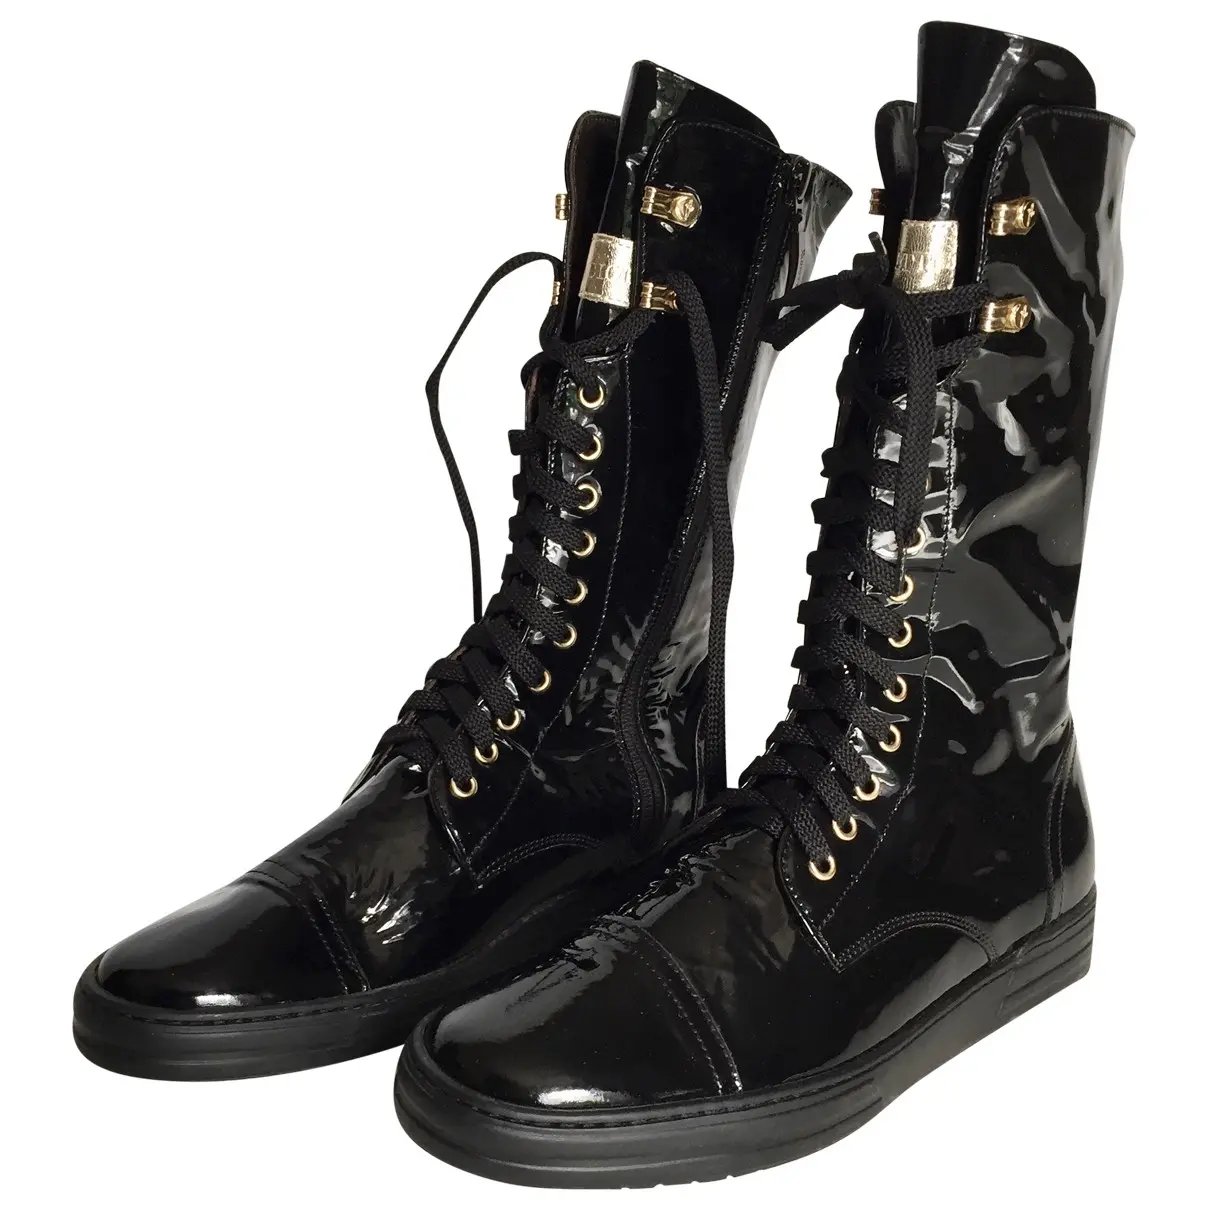 Leather lace up boots Cesare Paciotti